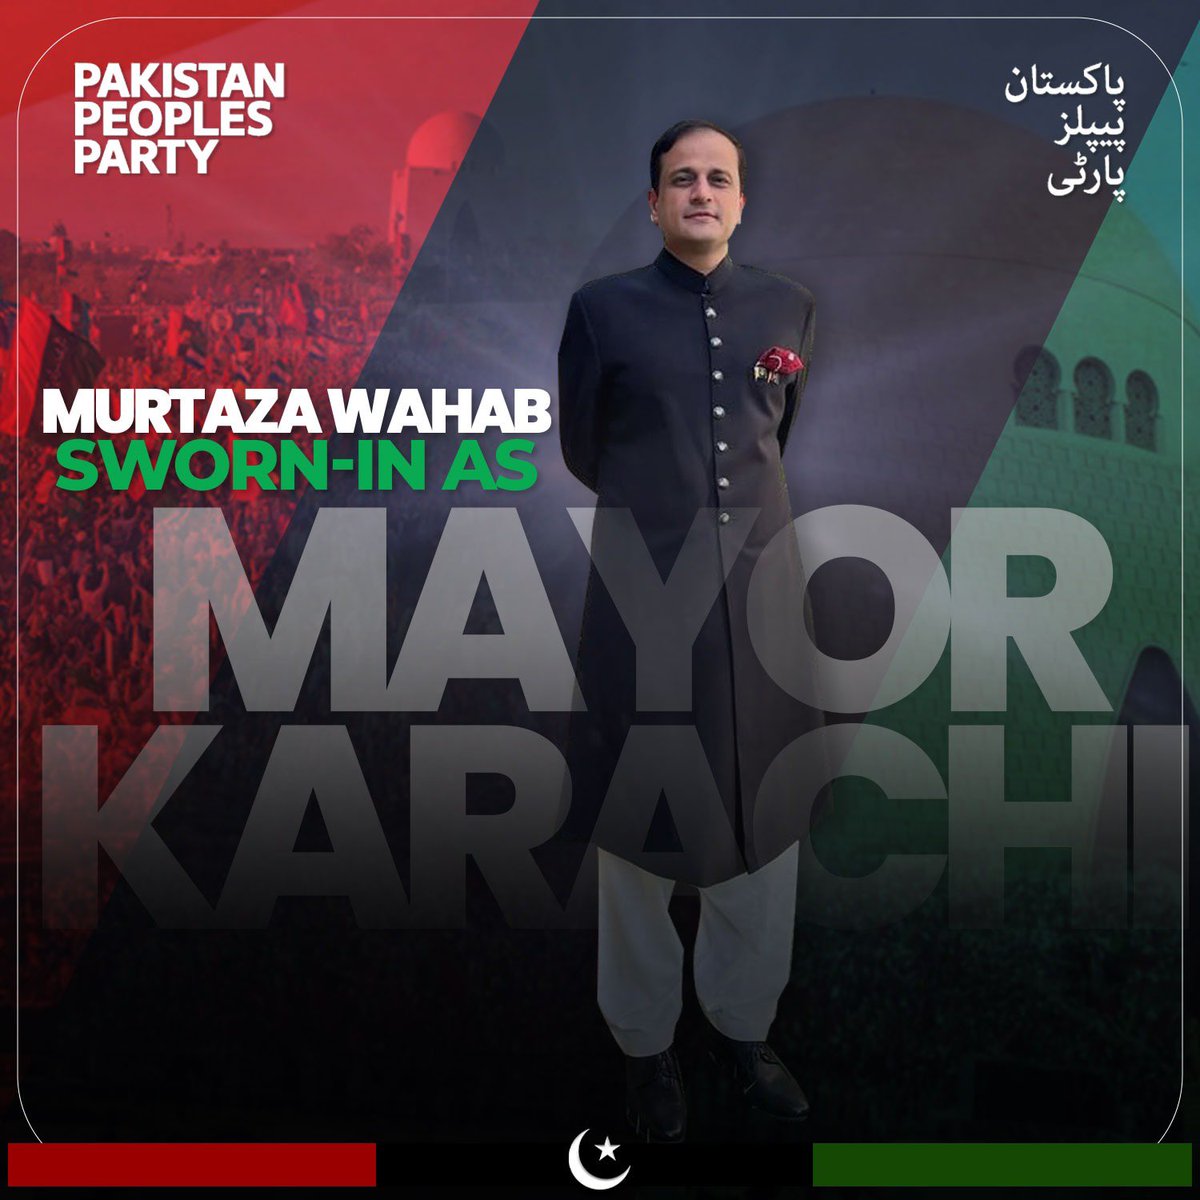 Congratulations to Barrister Murtaza Wahab on taking the oath of Mayor Karachi.
@murtazawahab1
#KarachiHumSabKa